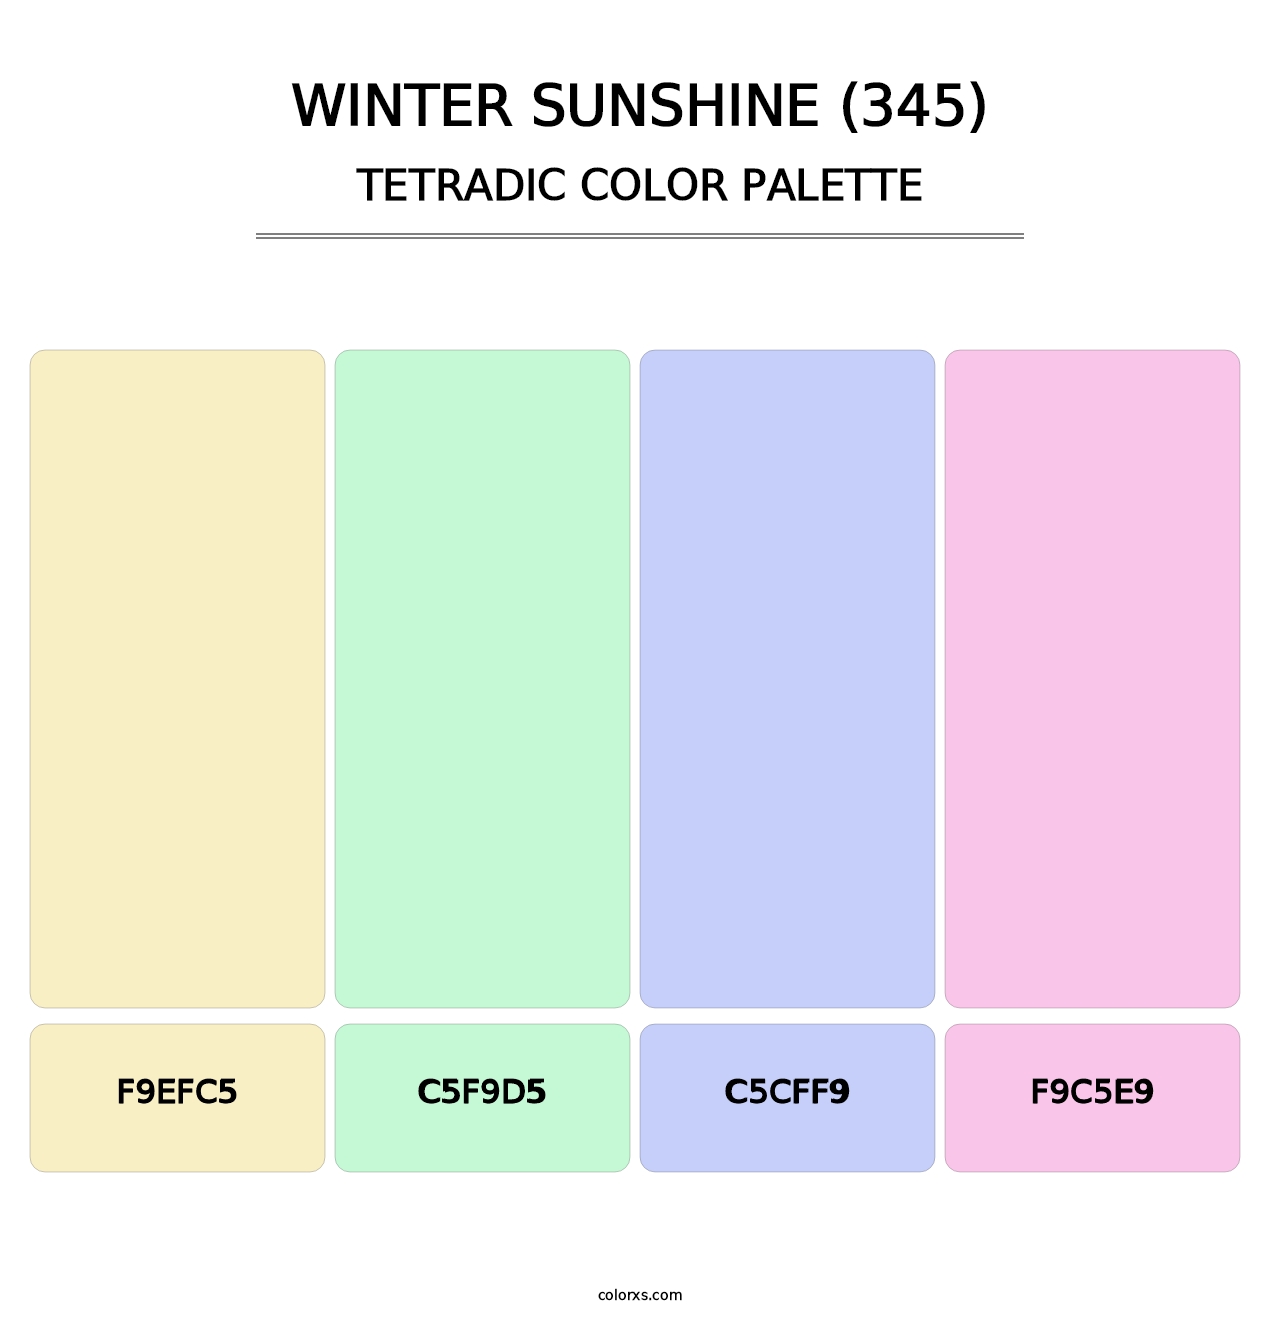 Winter Sunshine (345) - Tetradic Color Palette